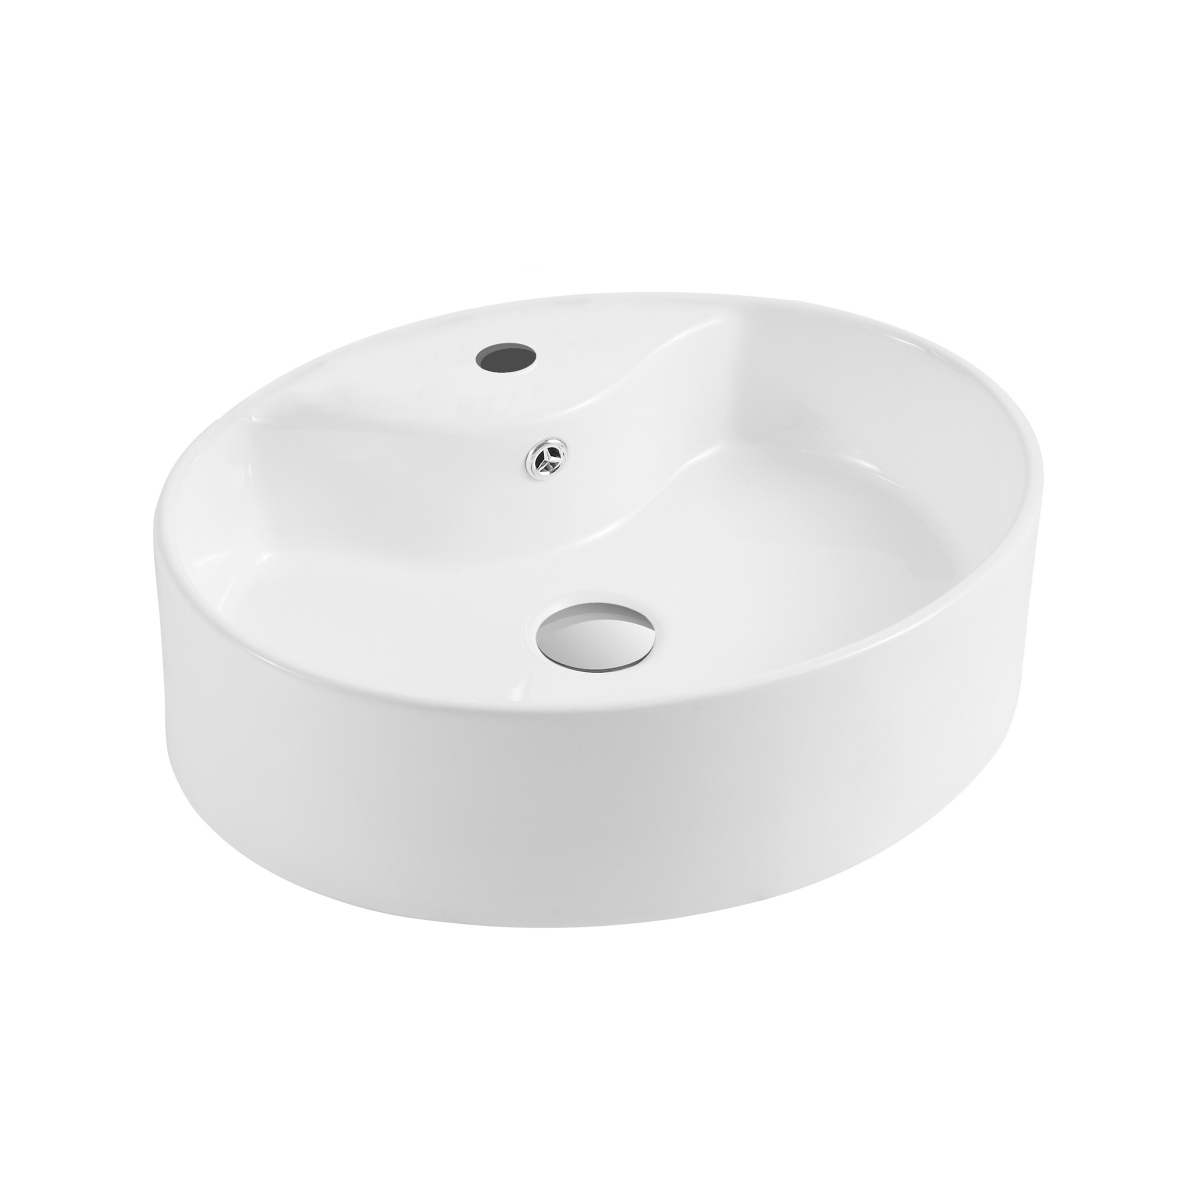 Bsk5401a Porcelain Ceramic Vitreous Oval 20 Inch Bathroom Vessel Sink